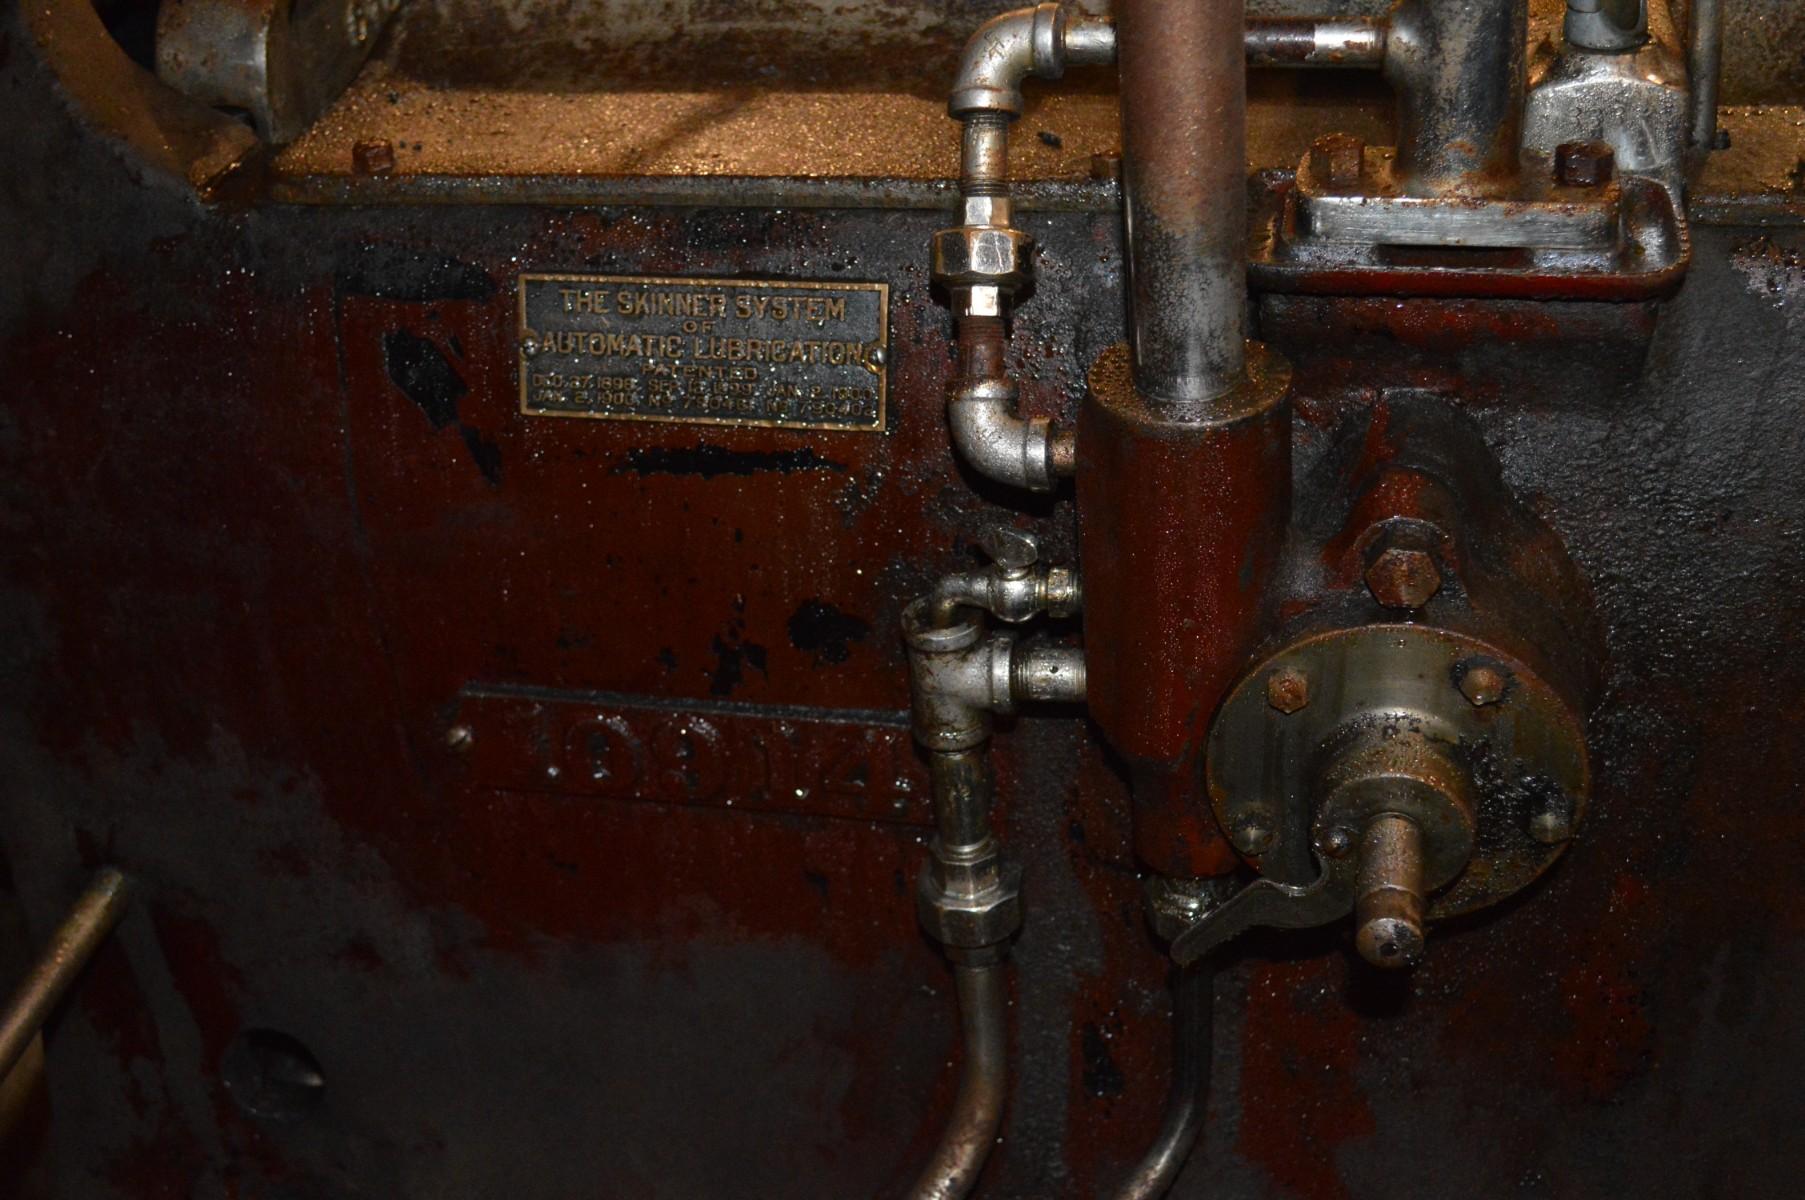 Antique Skinner Engine Co. Steam Engine